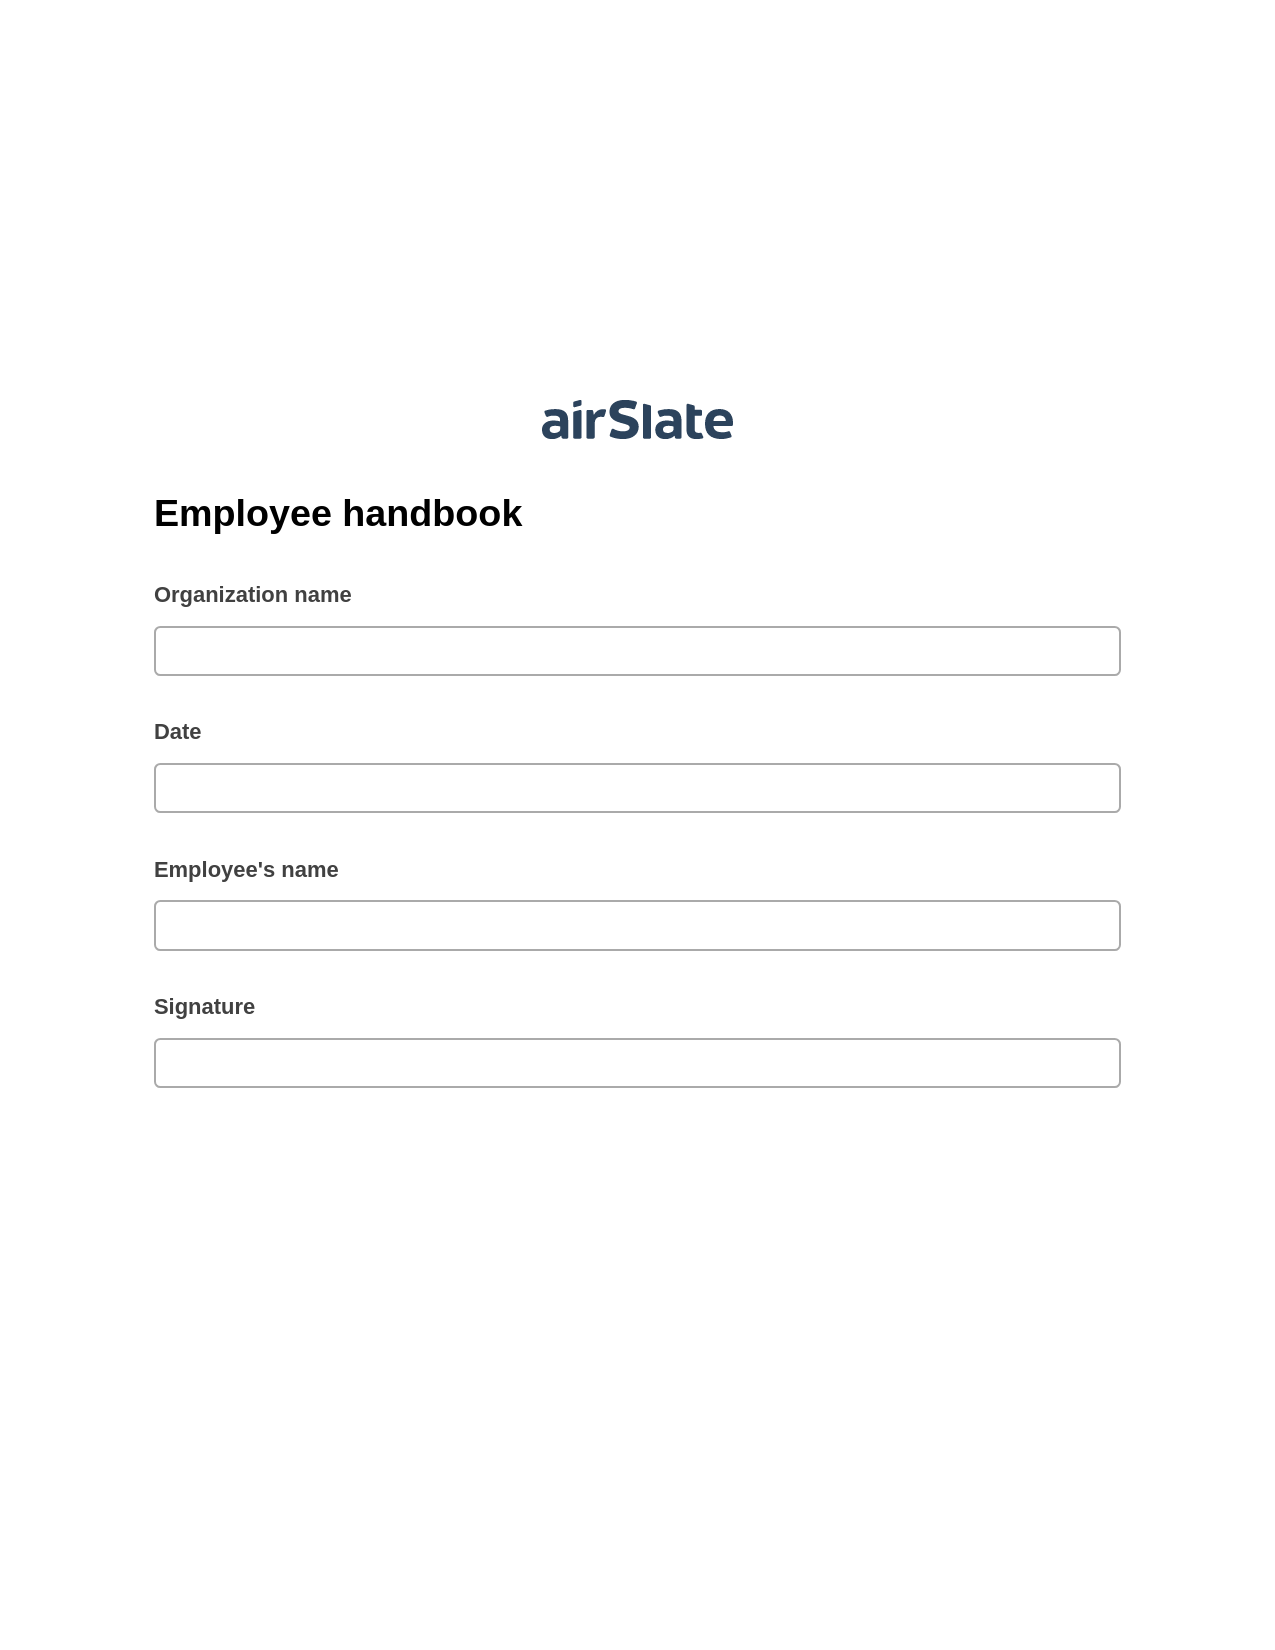 Multirole Employee handbook Pre-fill from Salesforce Record Bot, Google Sheet Two-Way Binding Bot, Google Drive Bot